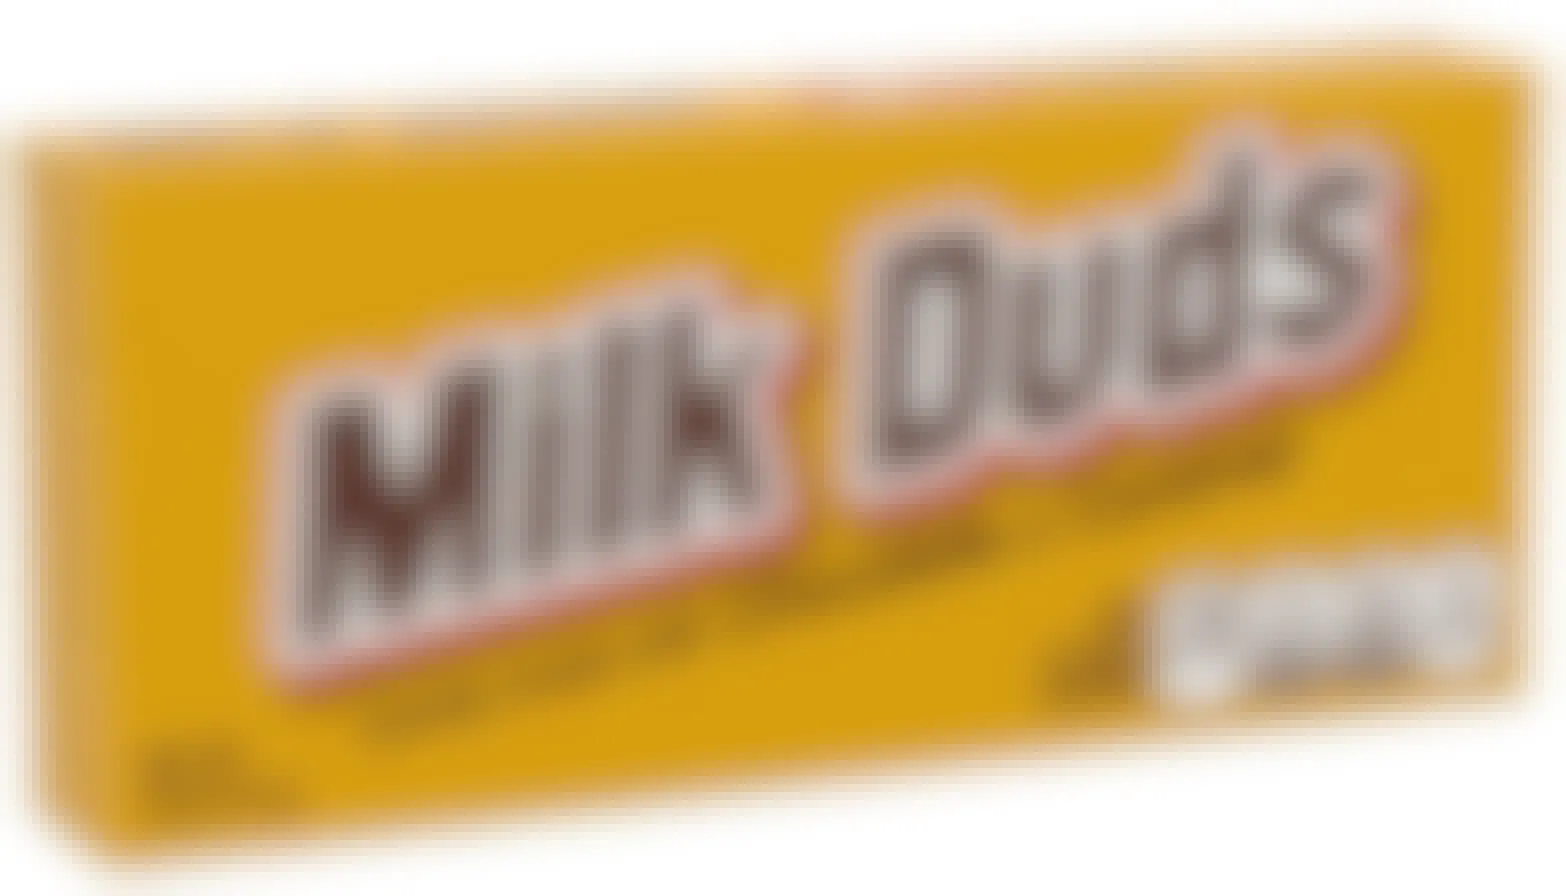 Milk duds candy box